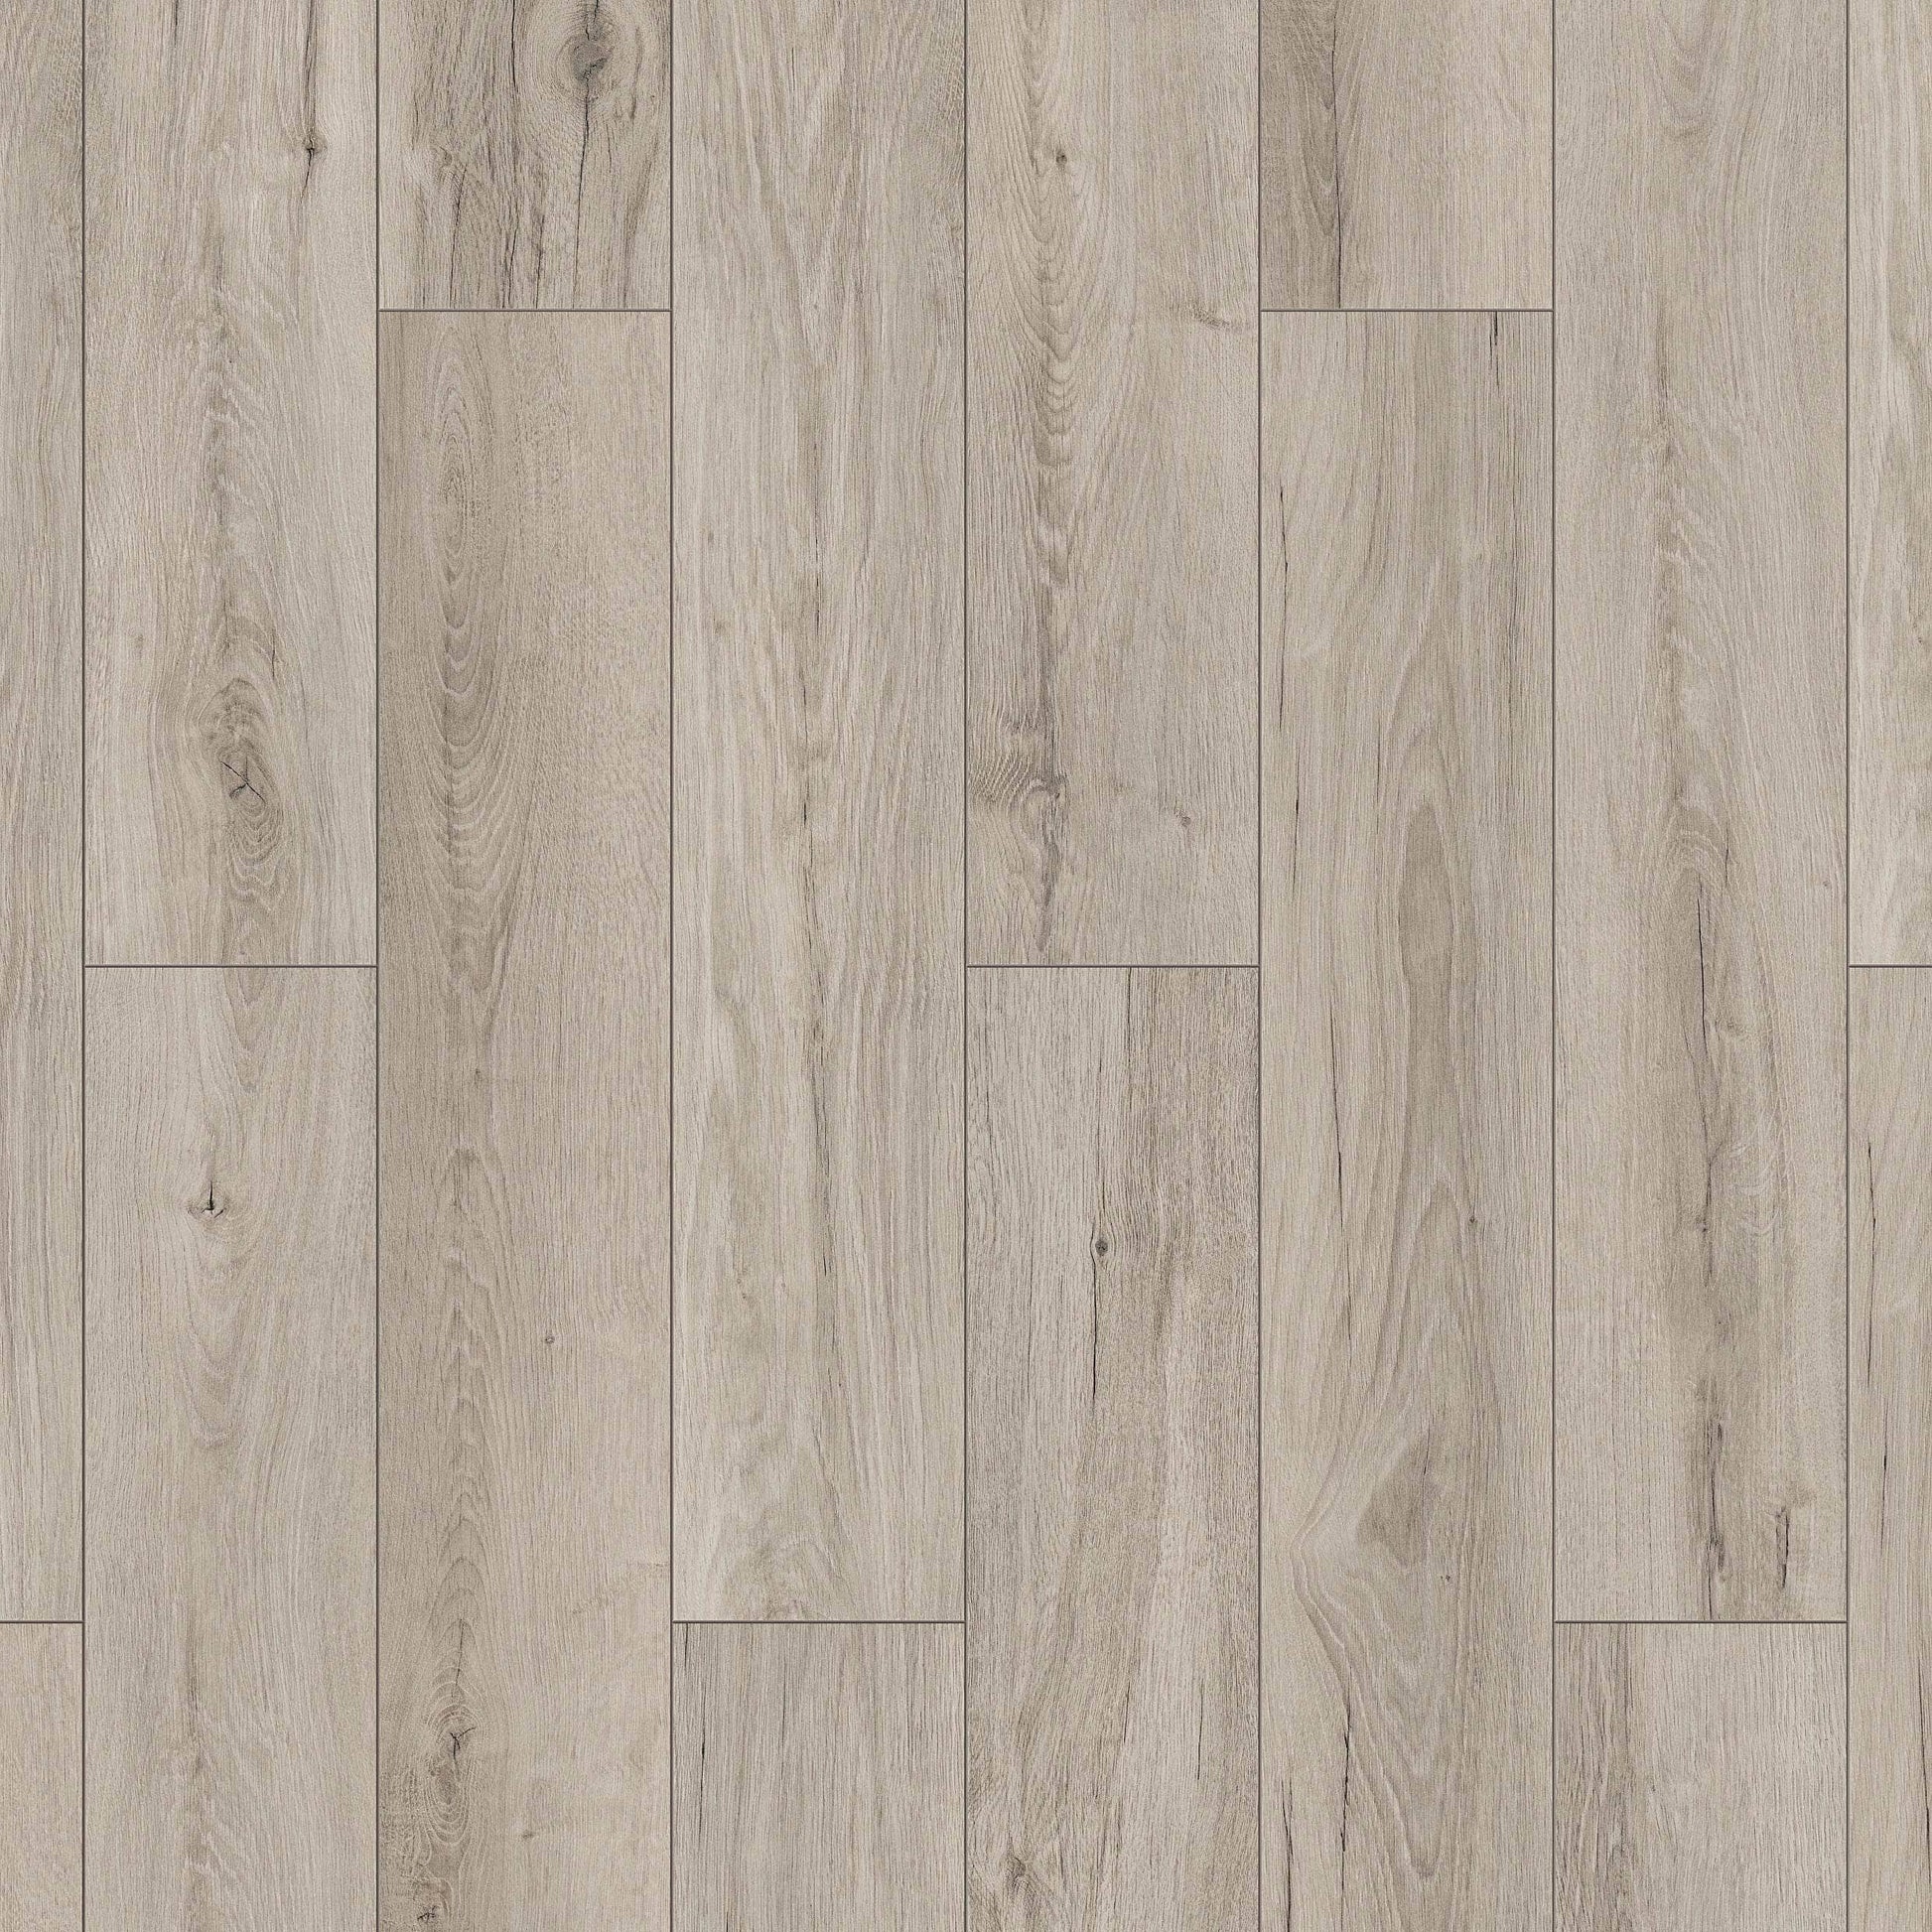 Flooring & Carpet  -  Krono Supernatural Longbow Oak 8mm Laminate Flooring (2.22m² Pack)  -  60003736